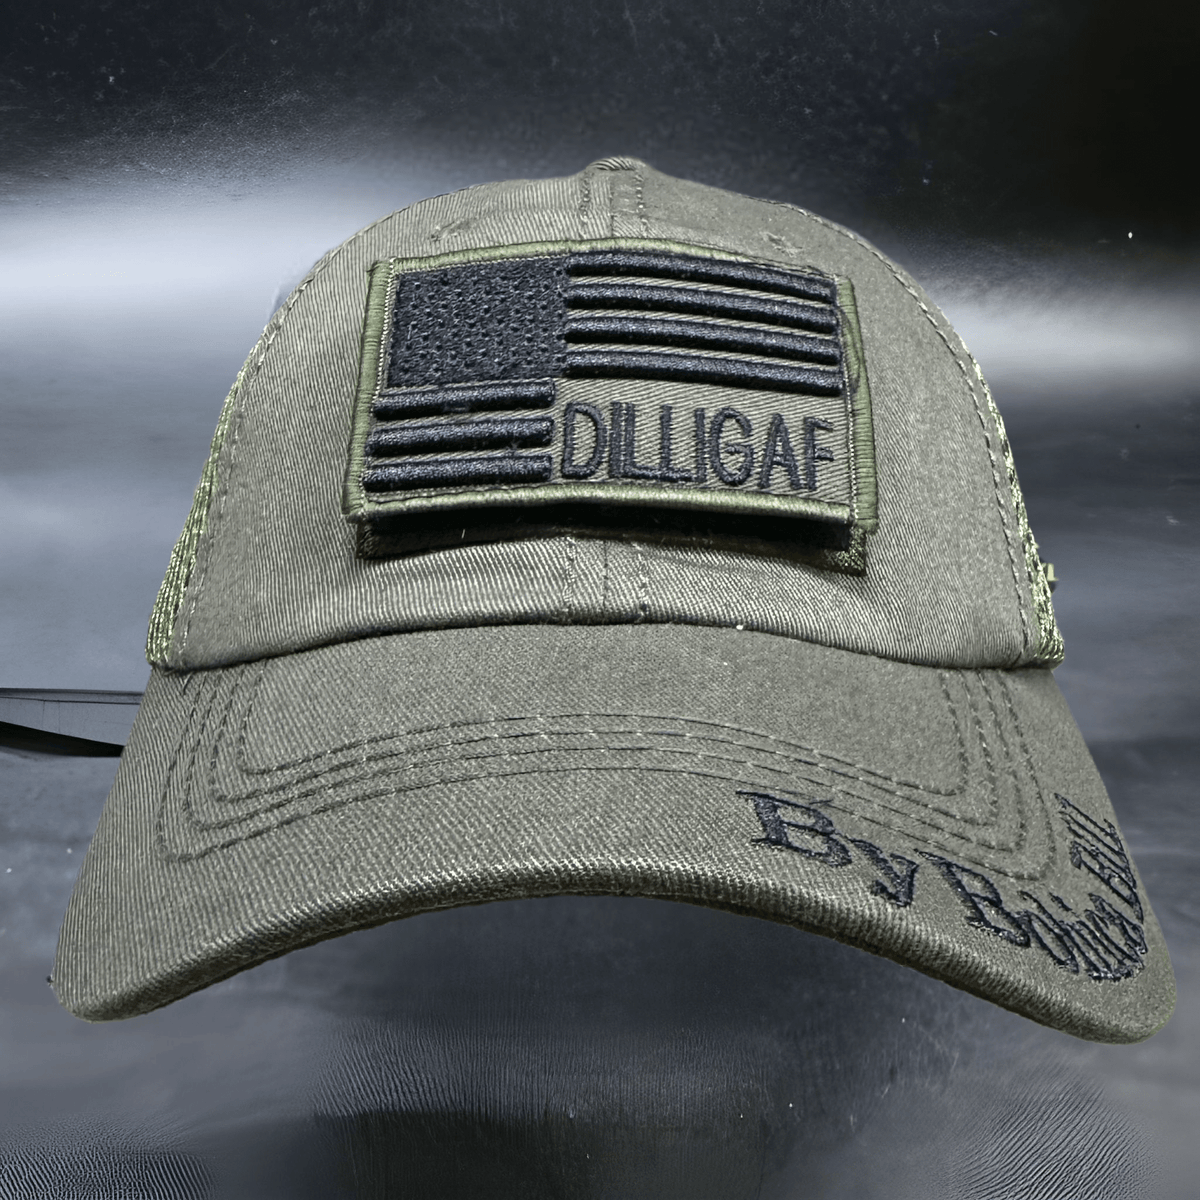 Olive Two Toned USA Mesh Dilligaf Hat